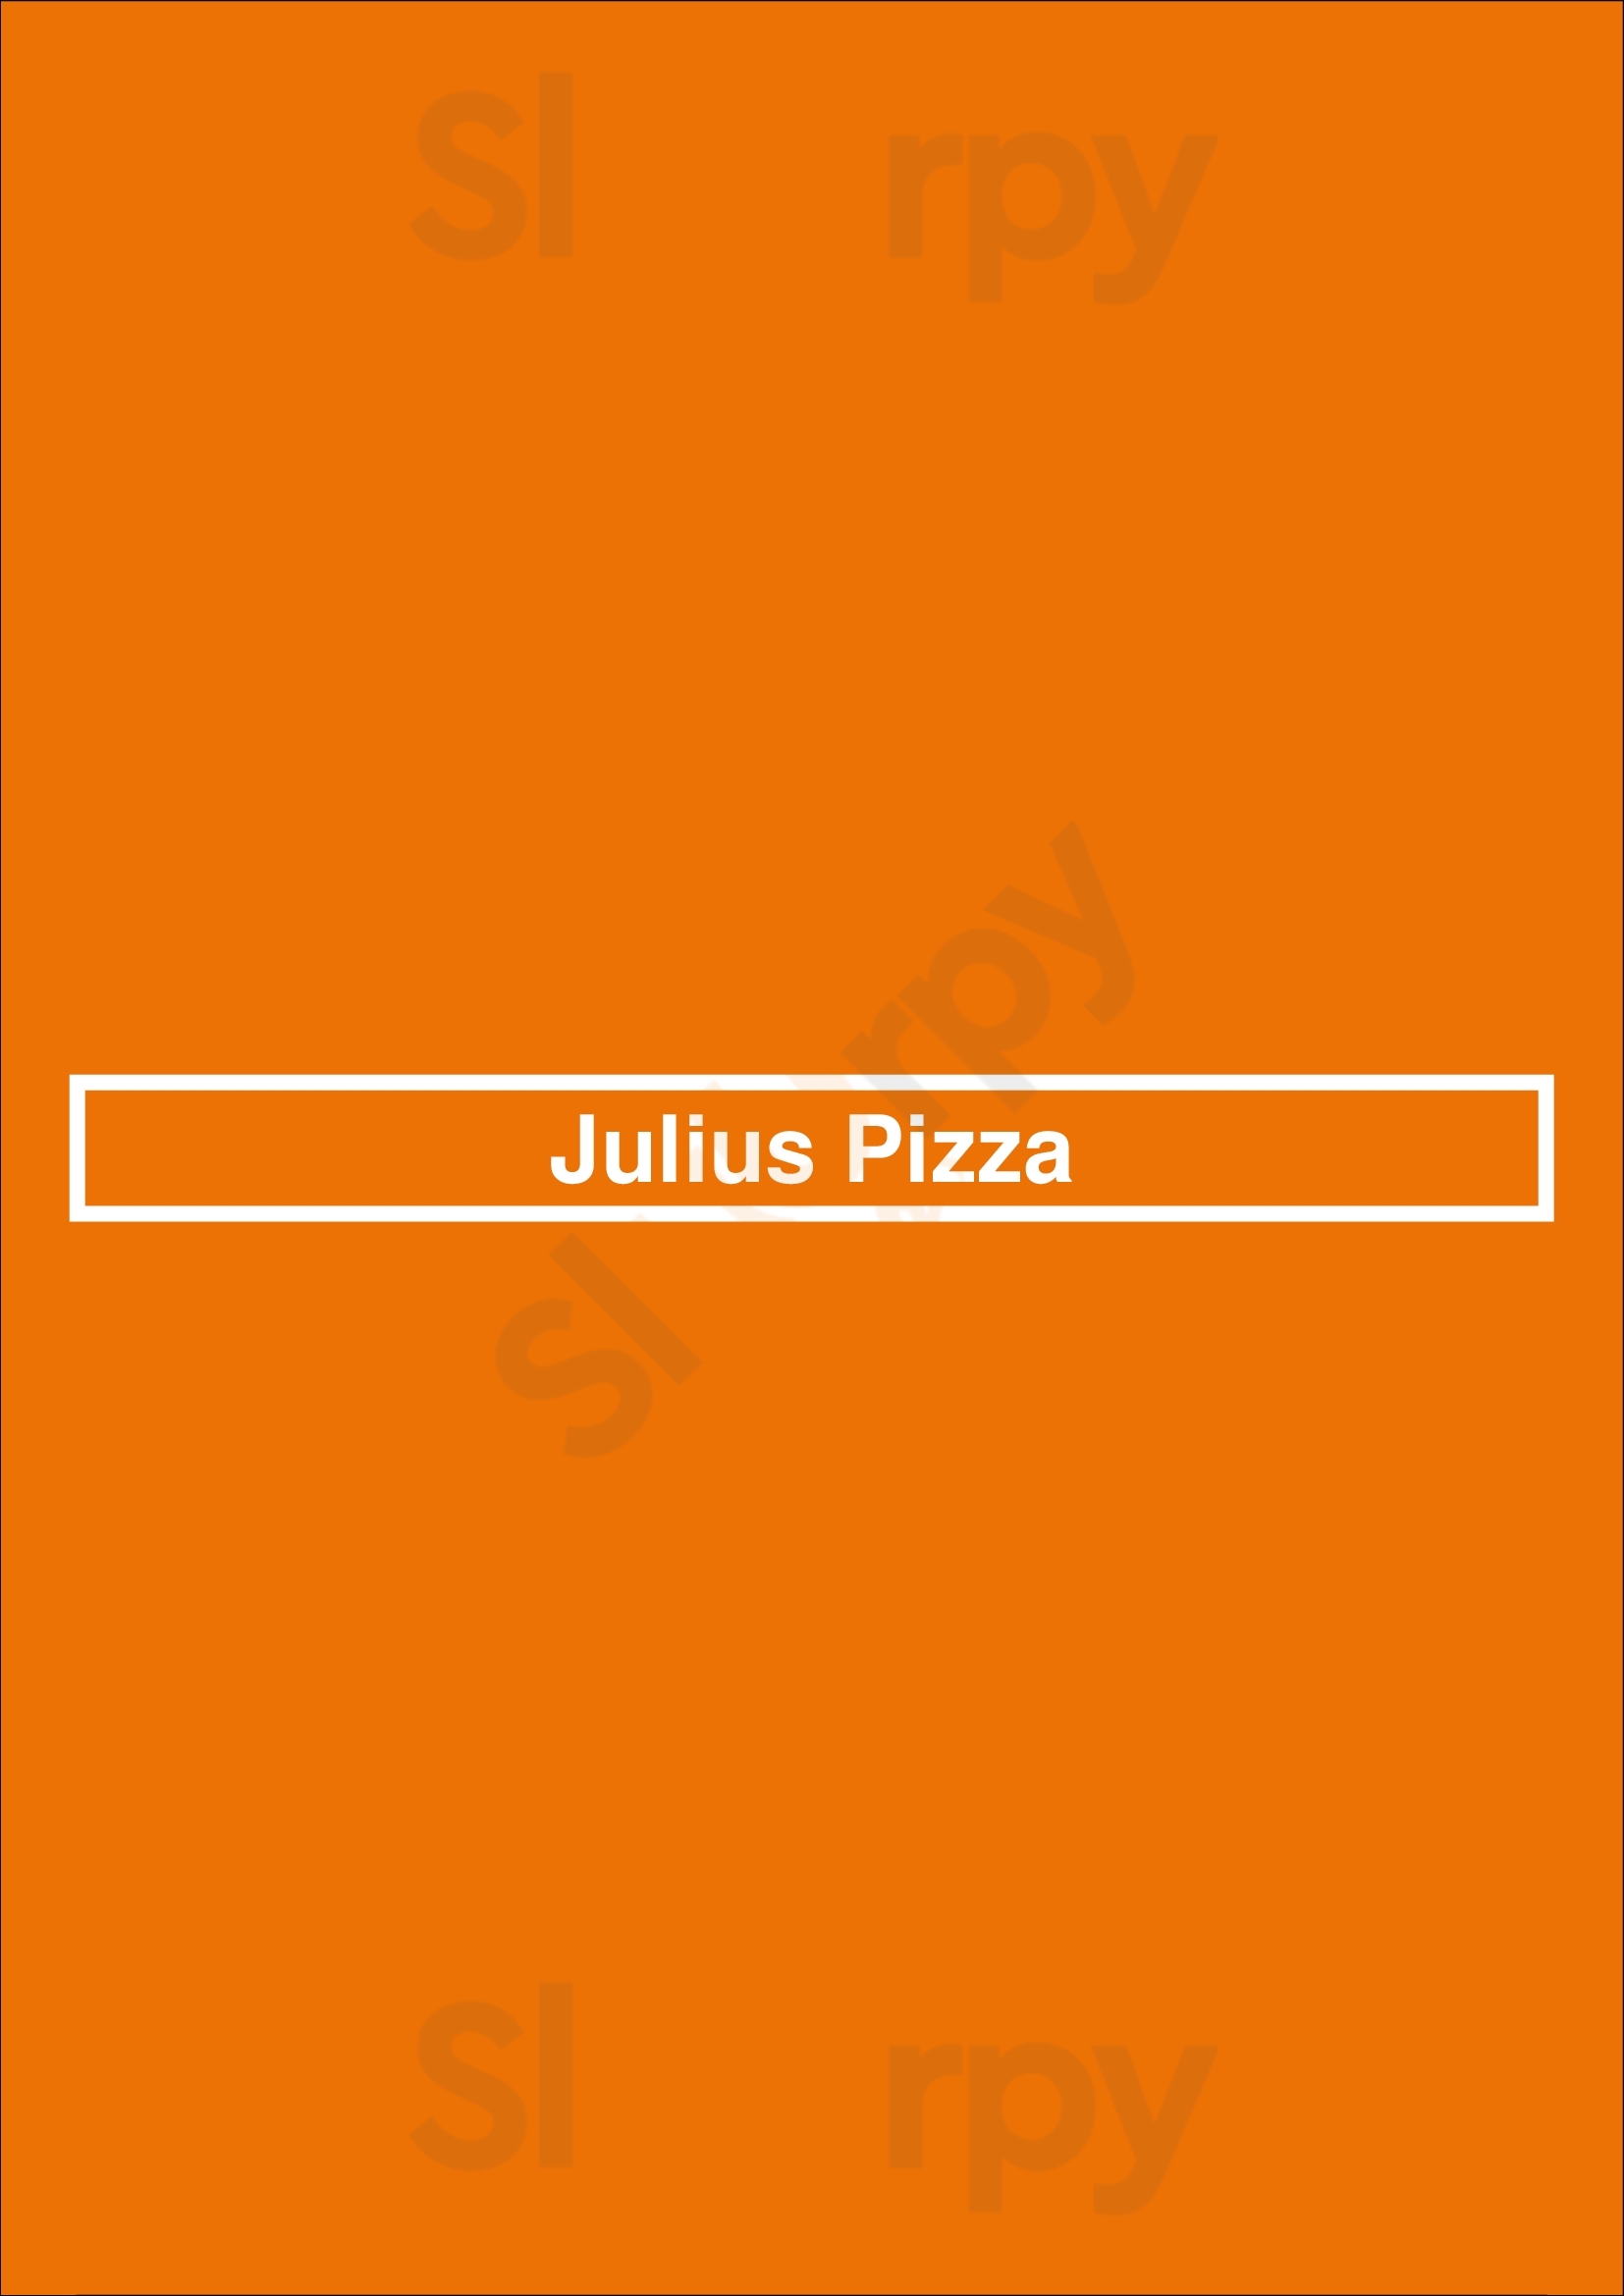 Julius Pizza St. Catharines Menu - 1